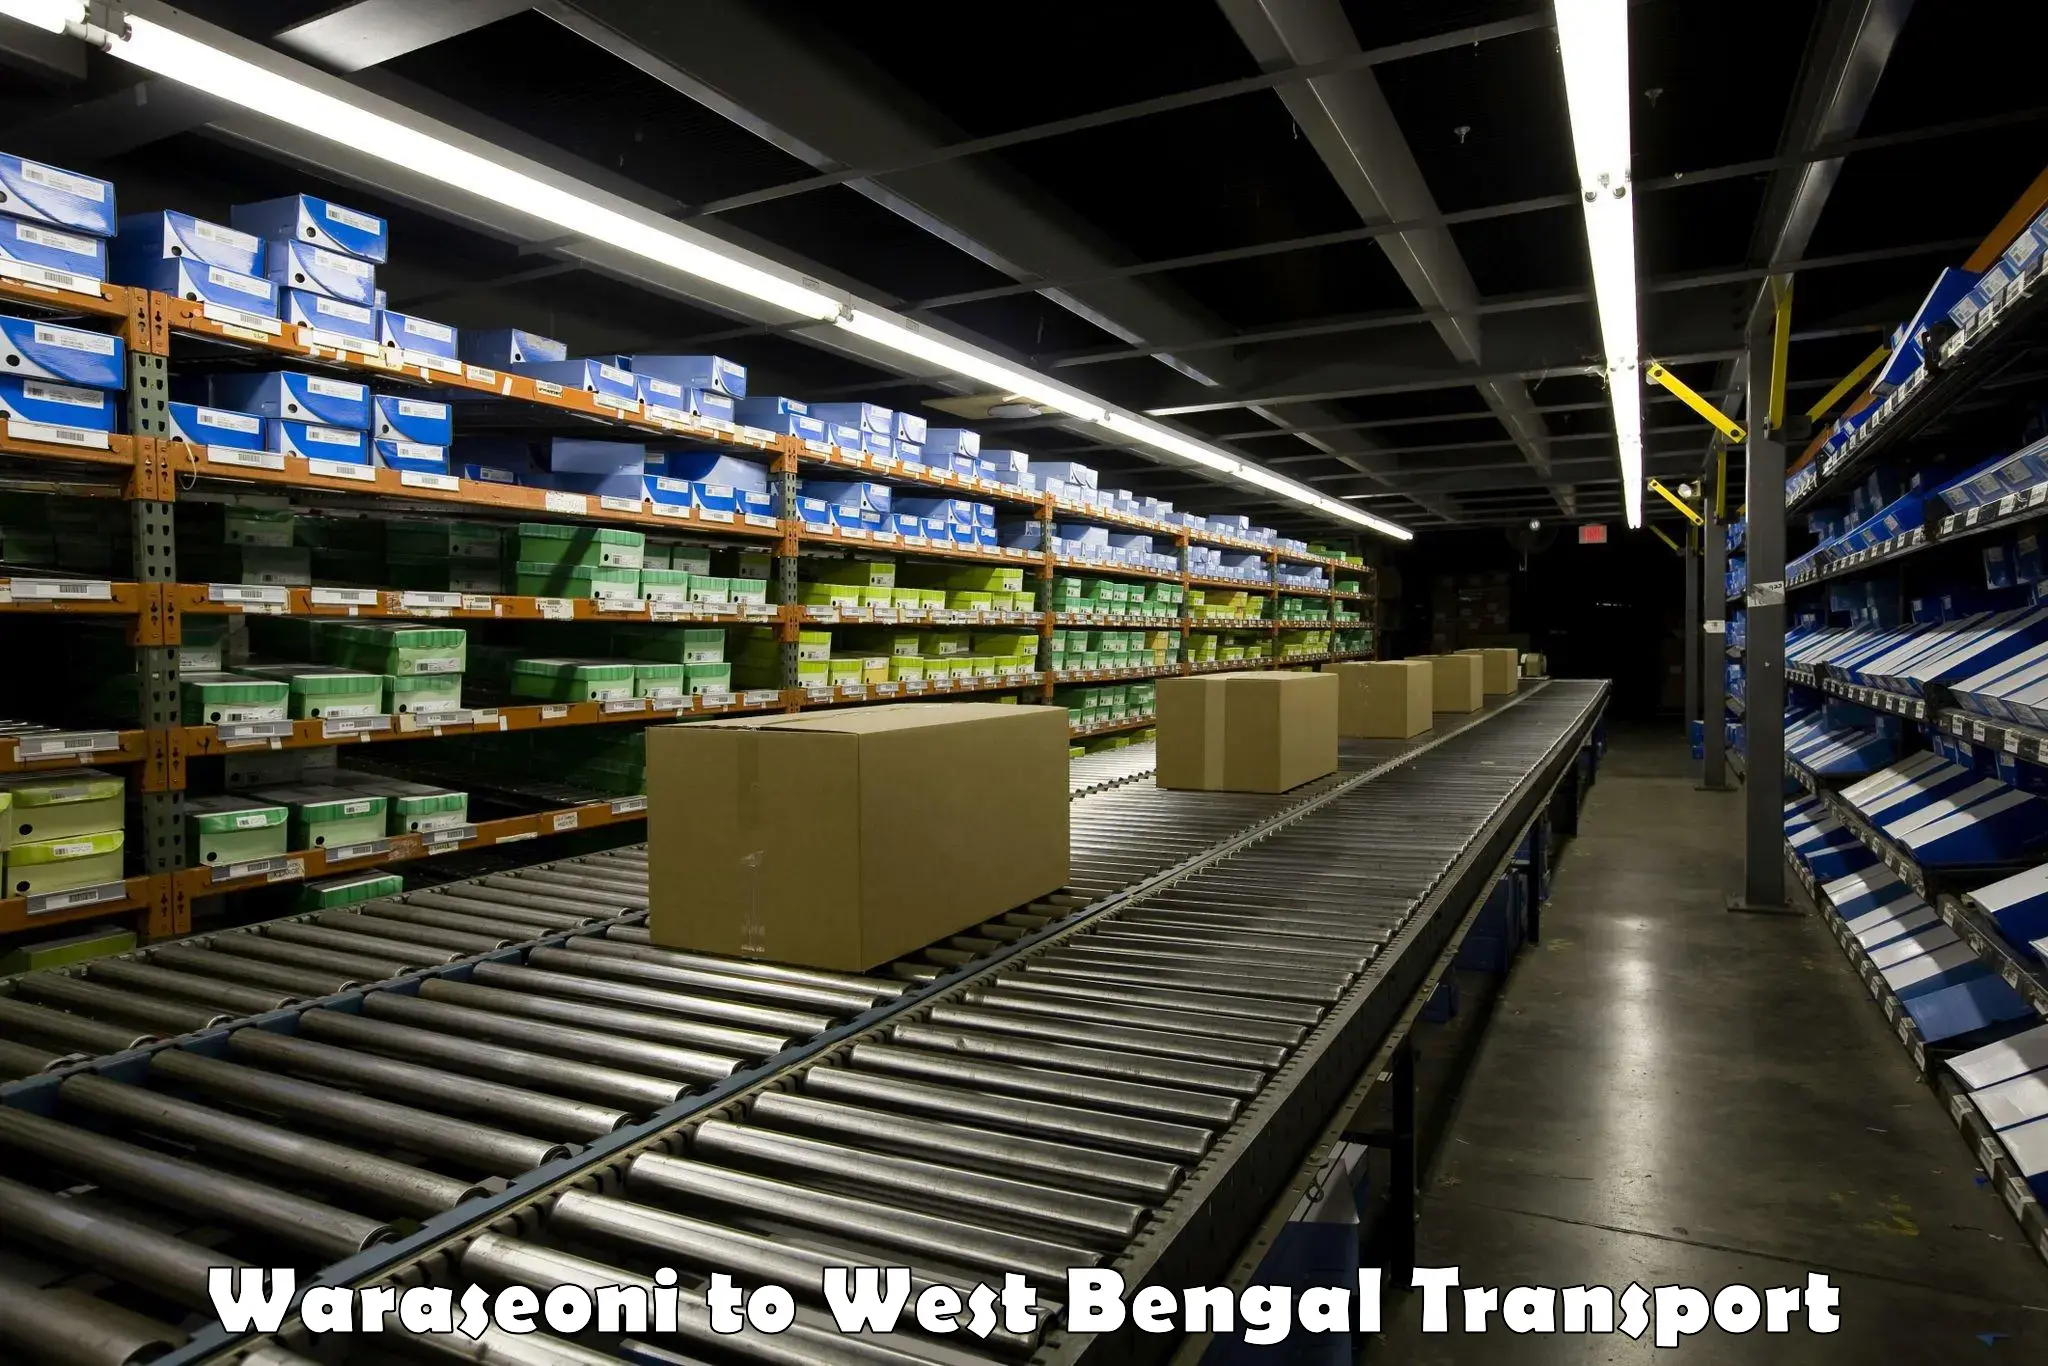 Truck transport companies in India Waraseoni to Bally